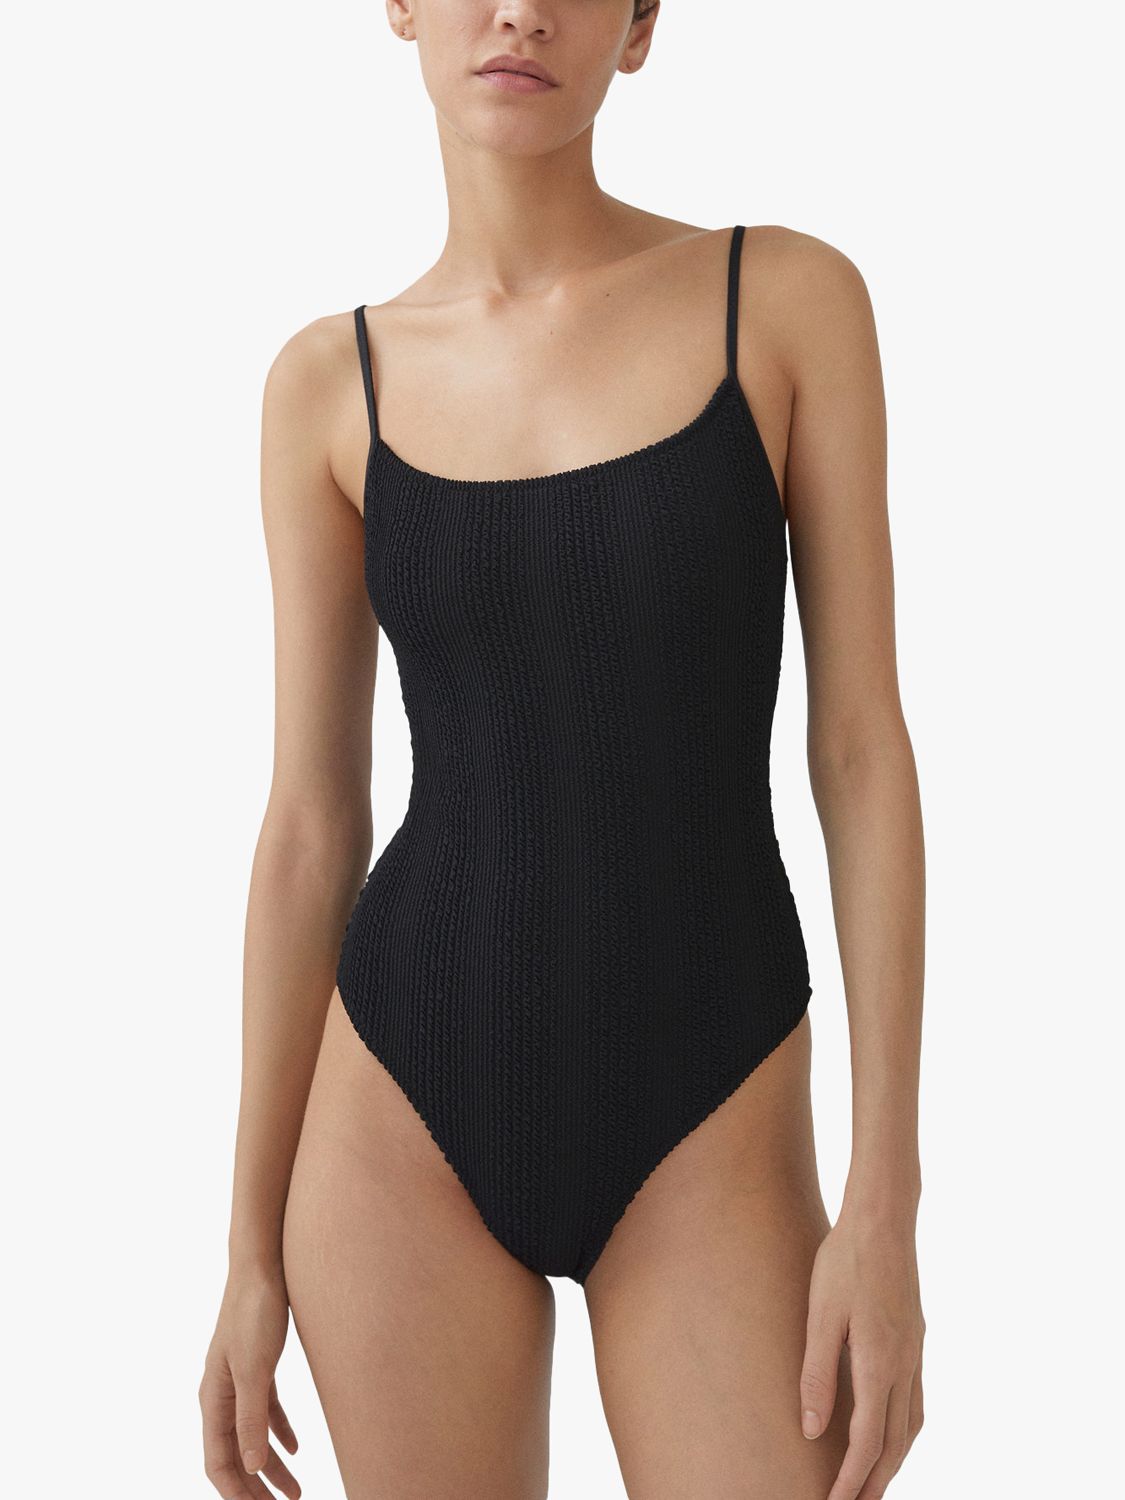 Mango Ocean Textured Swimsuit, Black, XS